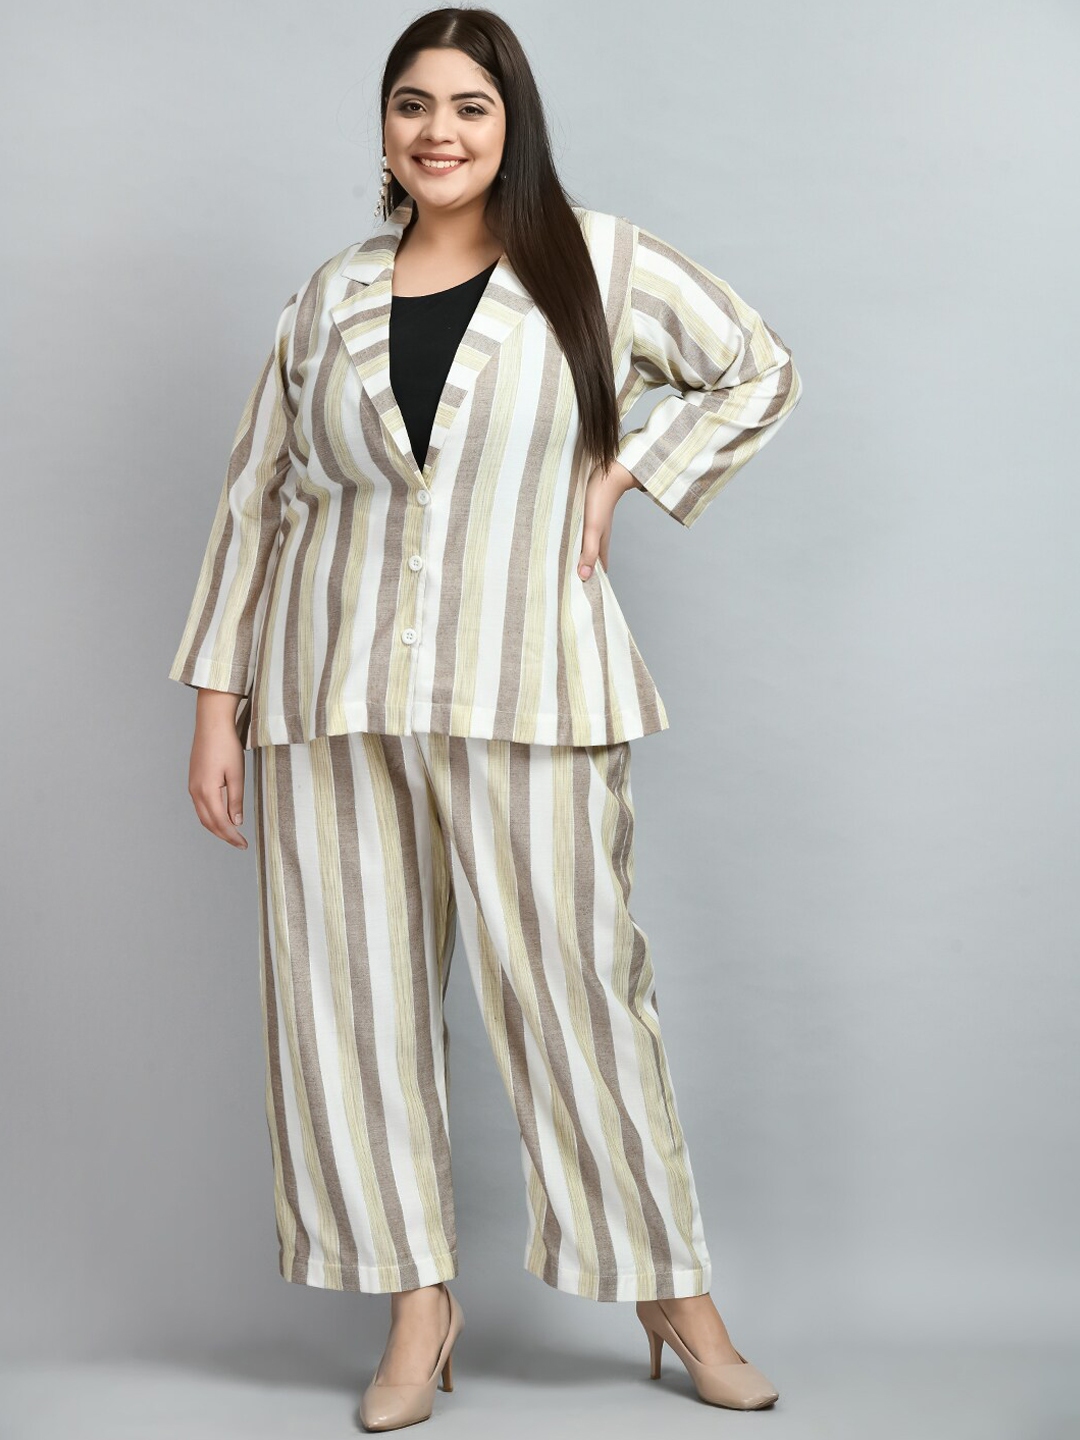 Dreams & Co. Women's Plus Size 2-Piece Capri Pj Set Pajamas